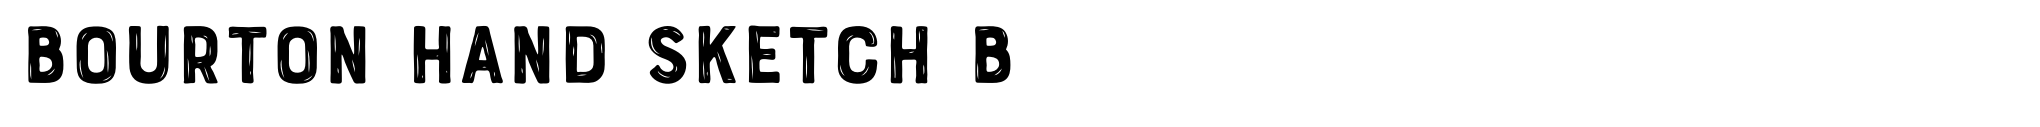 Bourton Hand Sketch B image